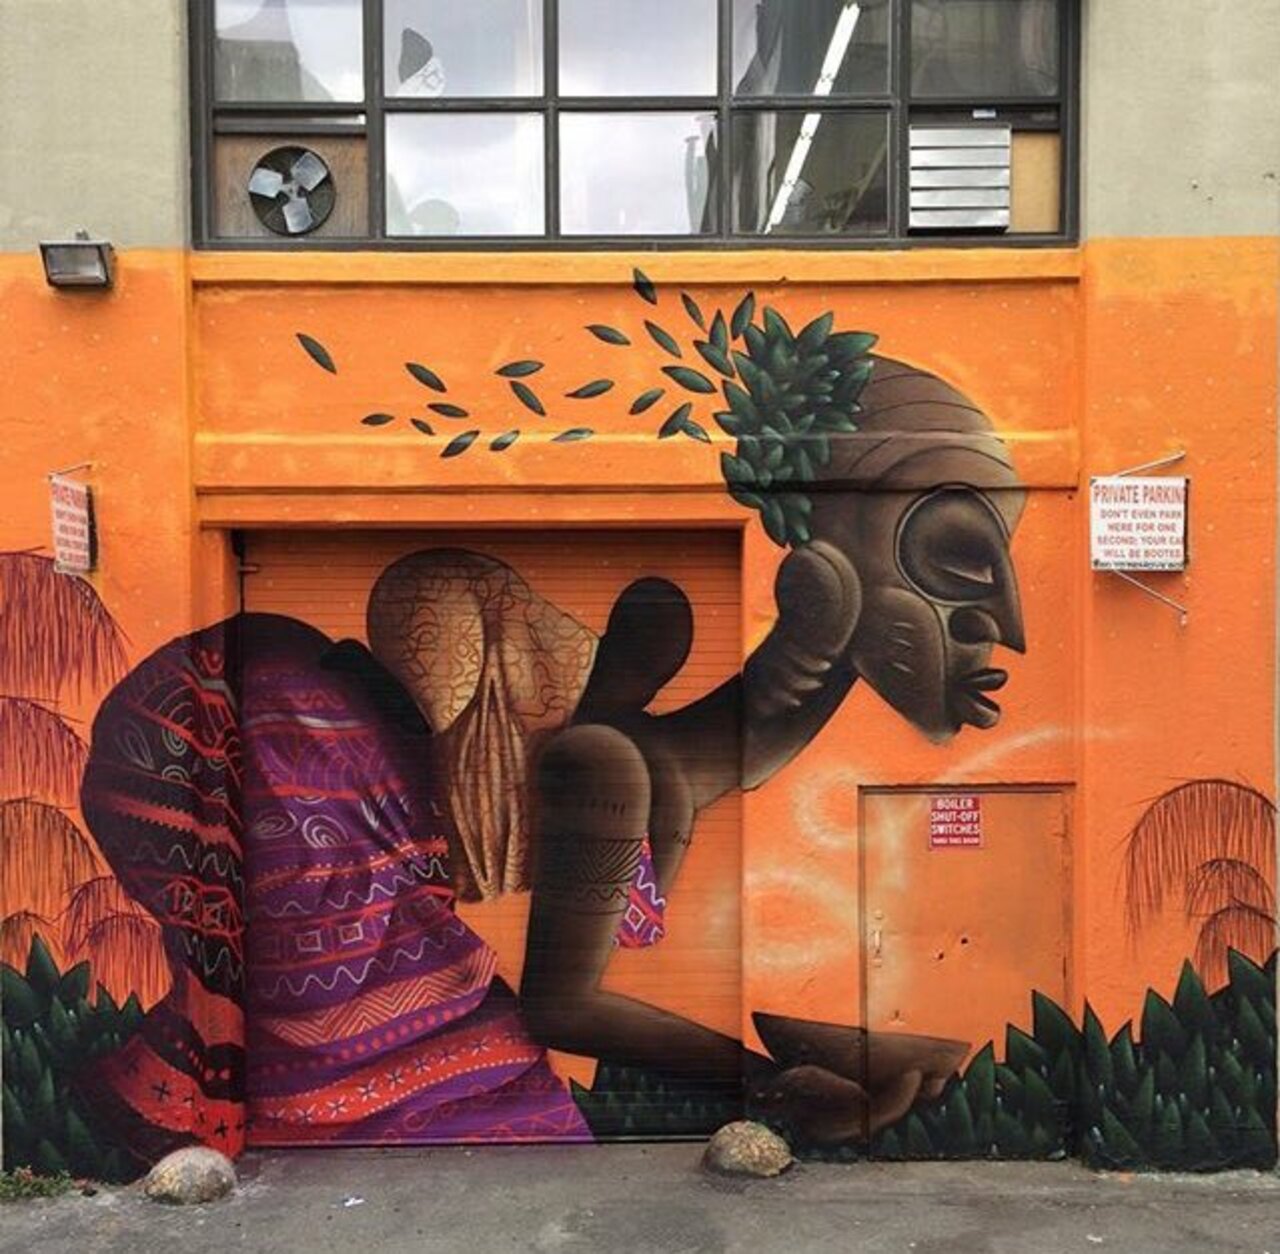 RT @JARBASV1: New Street Art by Alexandre Keto in NYC 

#art #graffiti #mural #streetart https://t.co/EcivhCZmZl